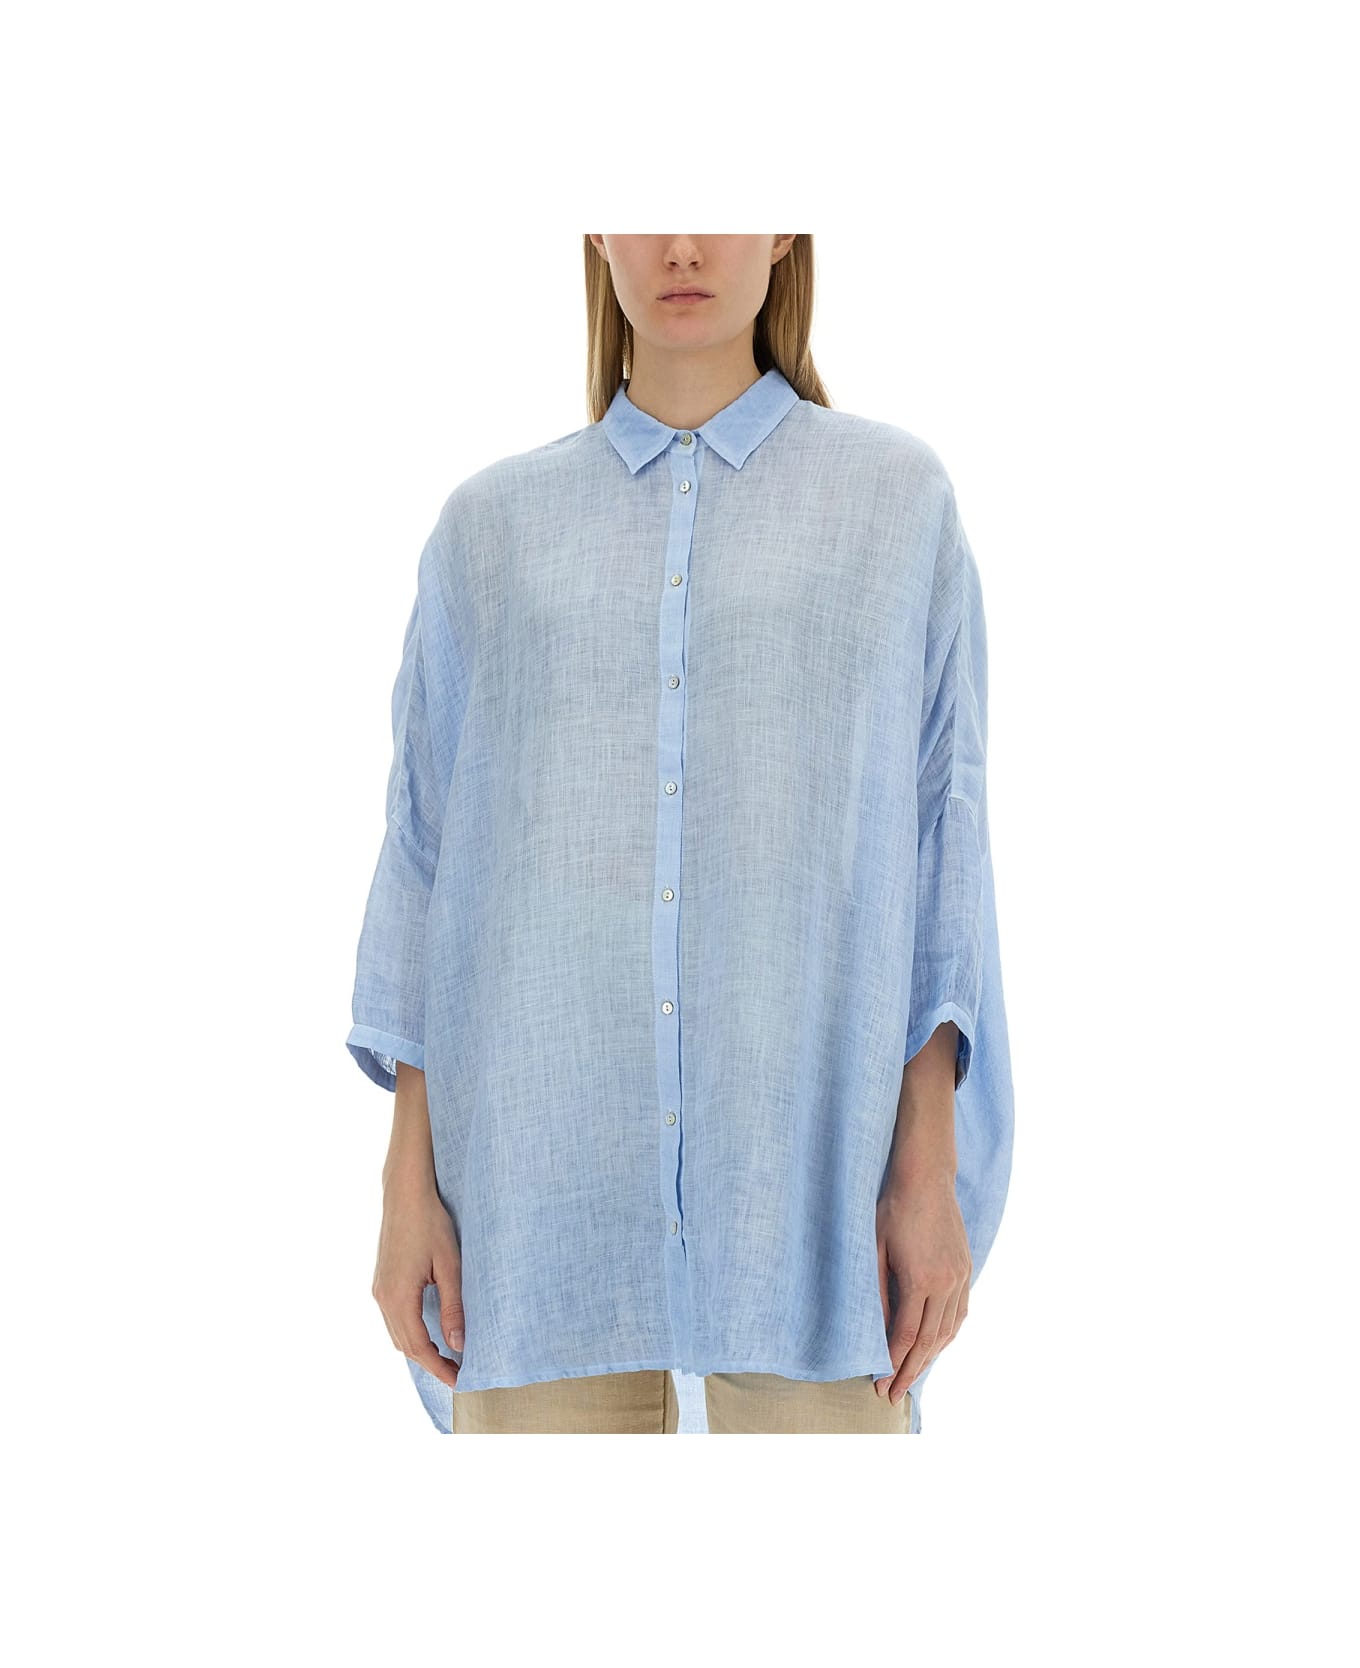 120% Lino Linen Shirt - BABY BLUE シャツ